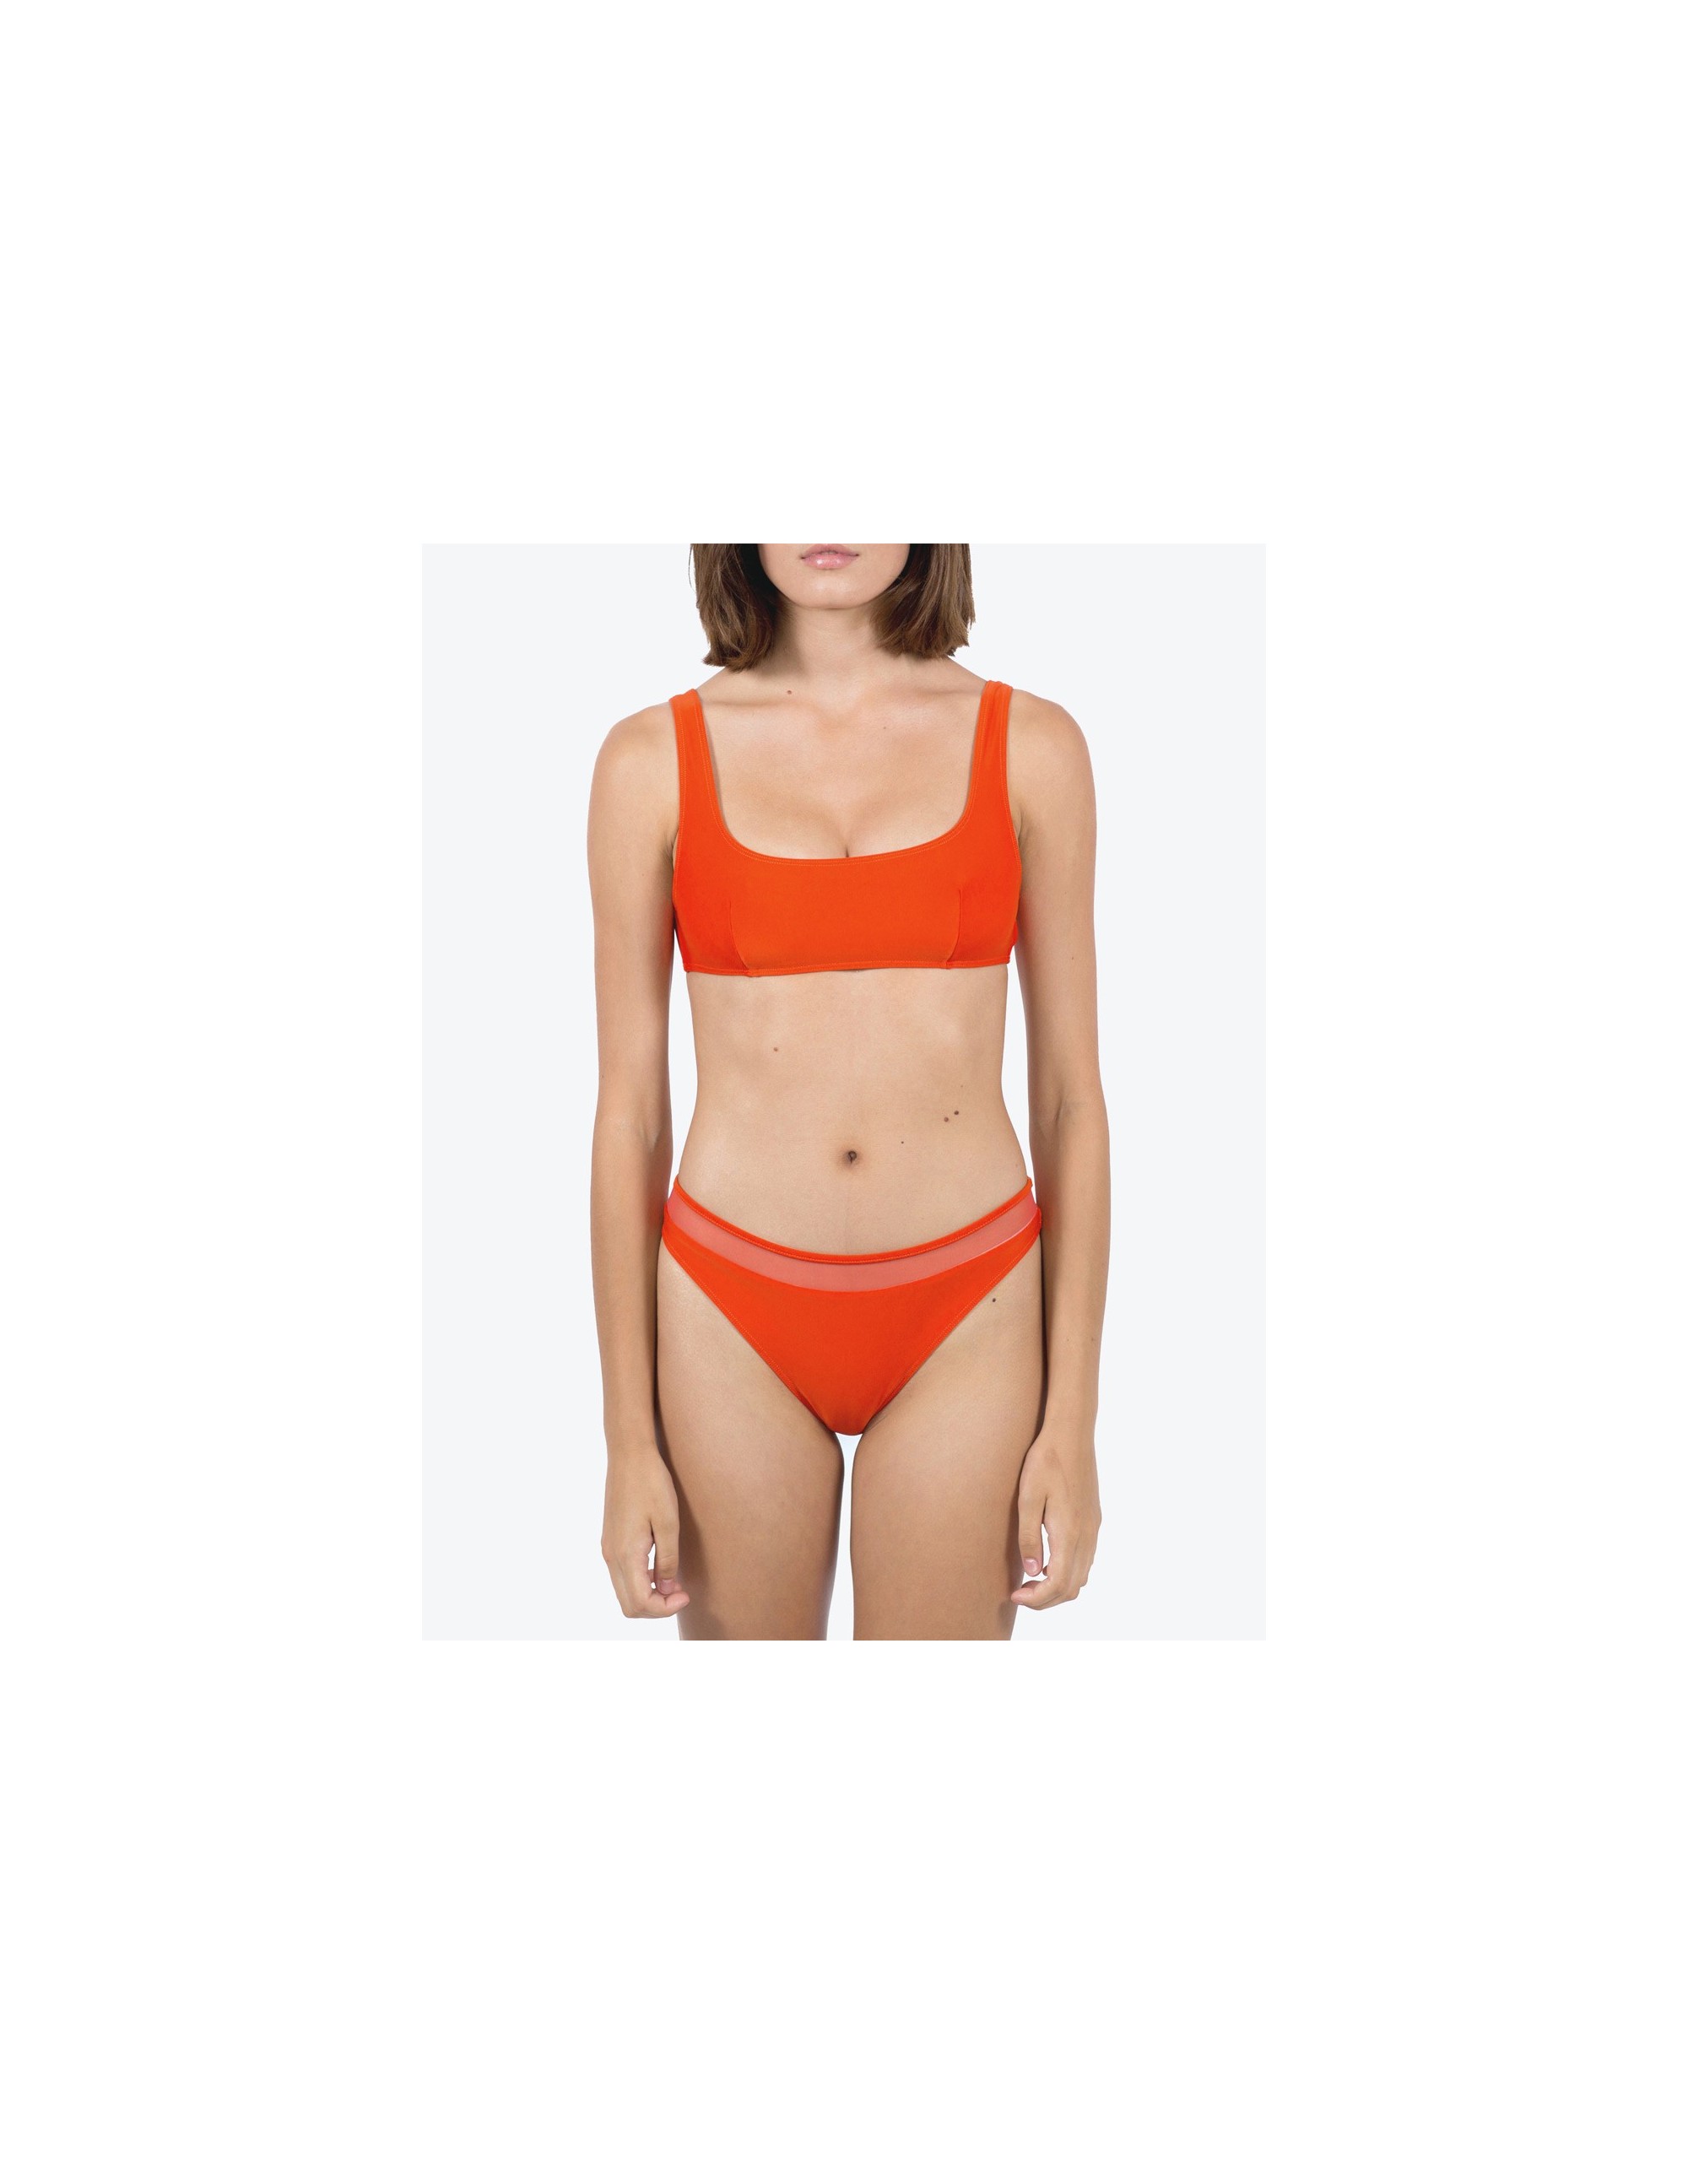 JAZ bikini bottom - CHARACTER RED